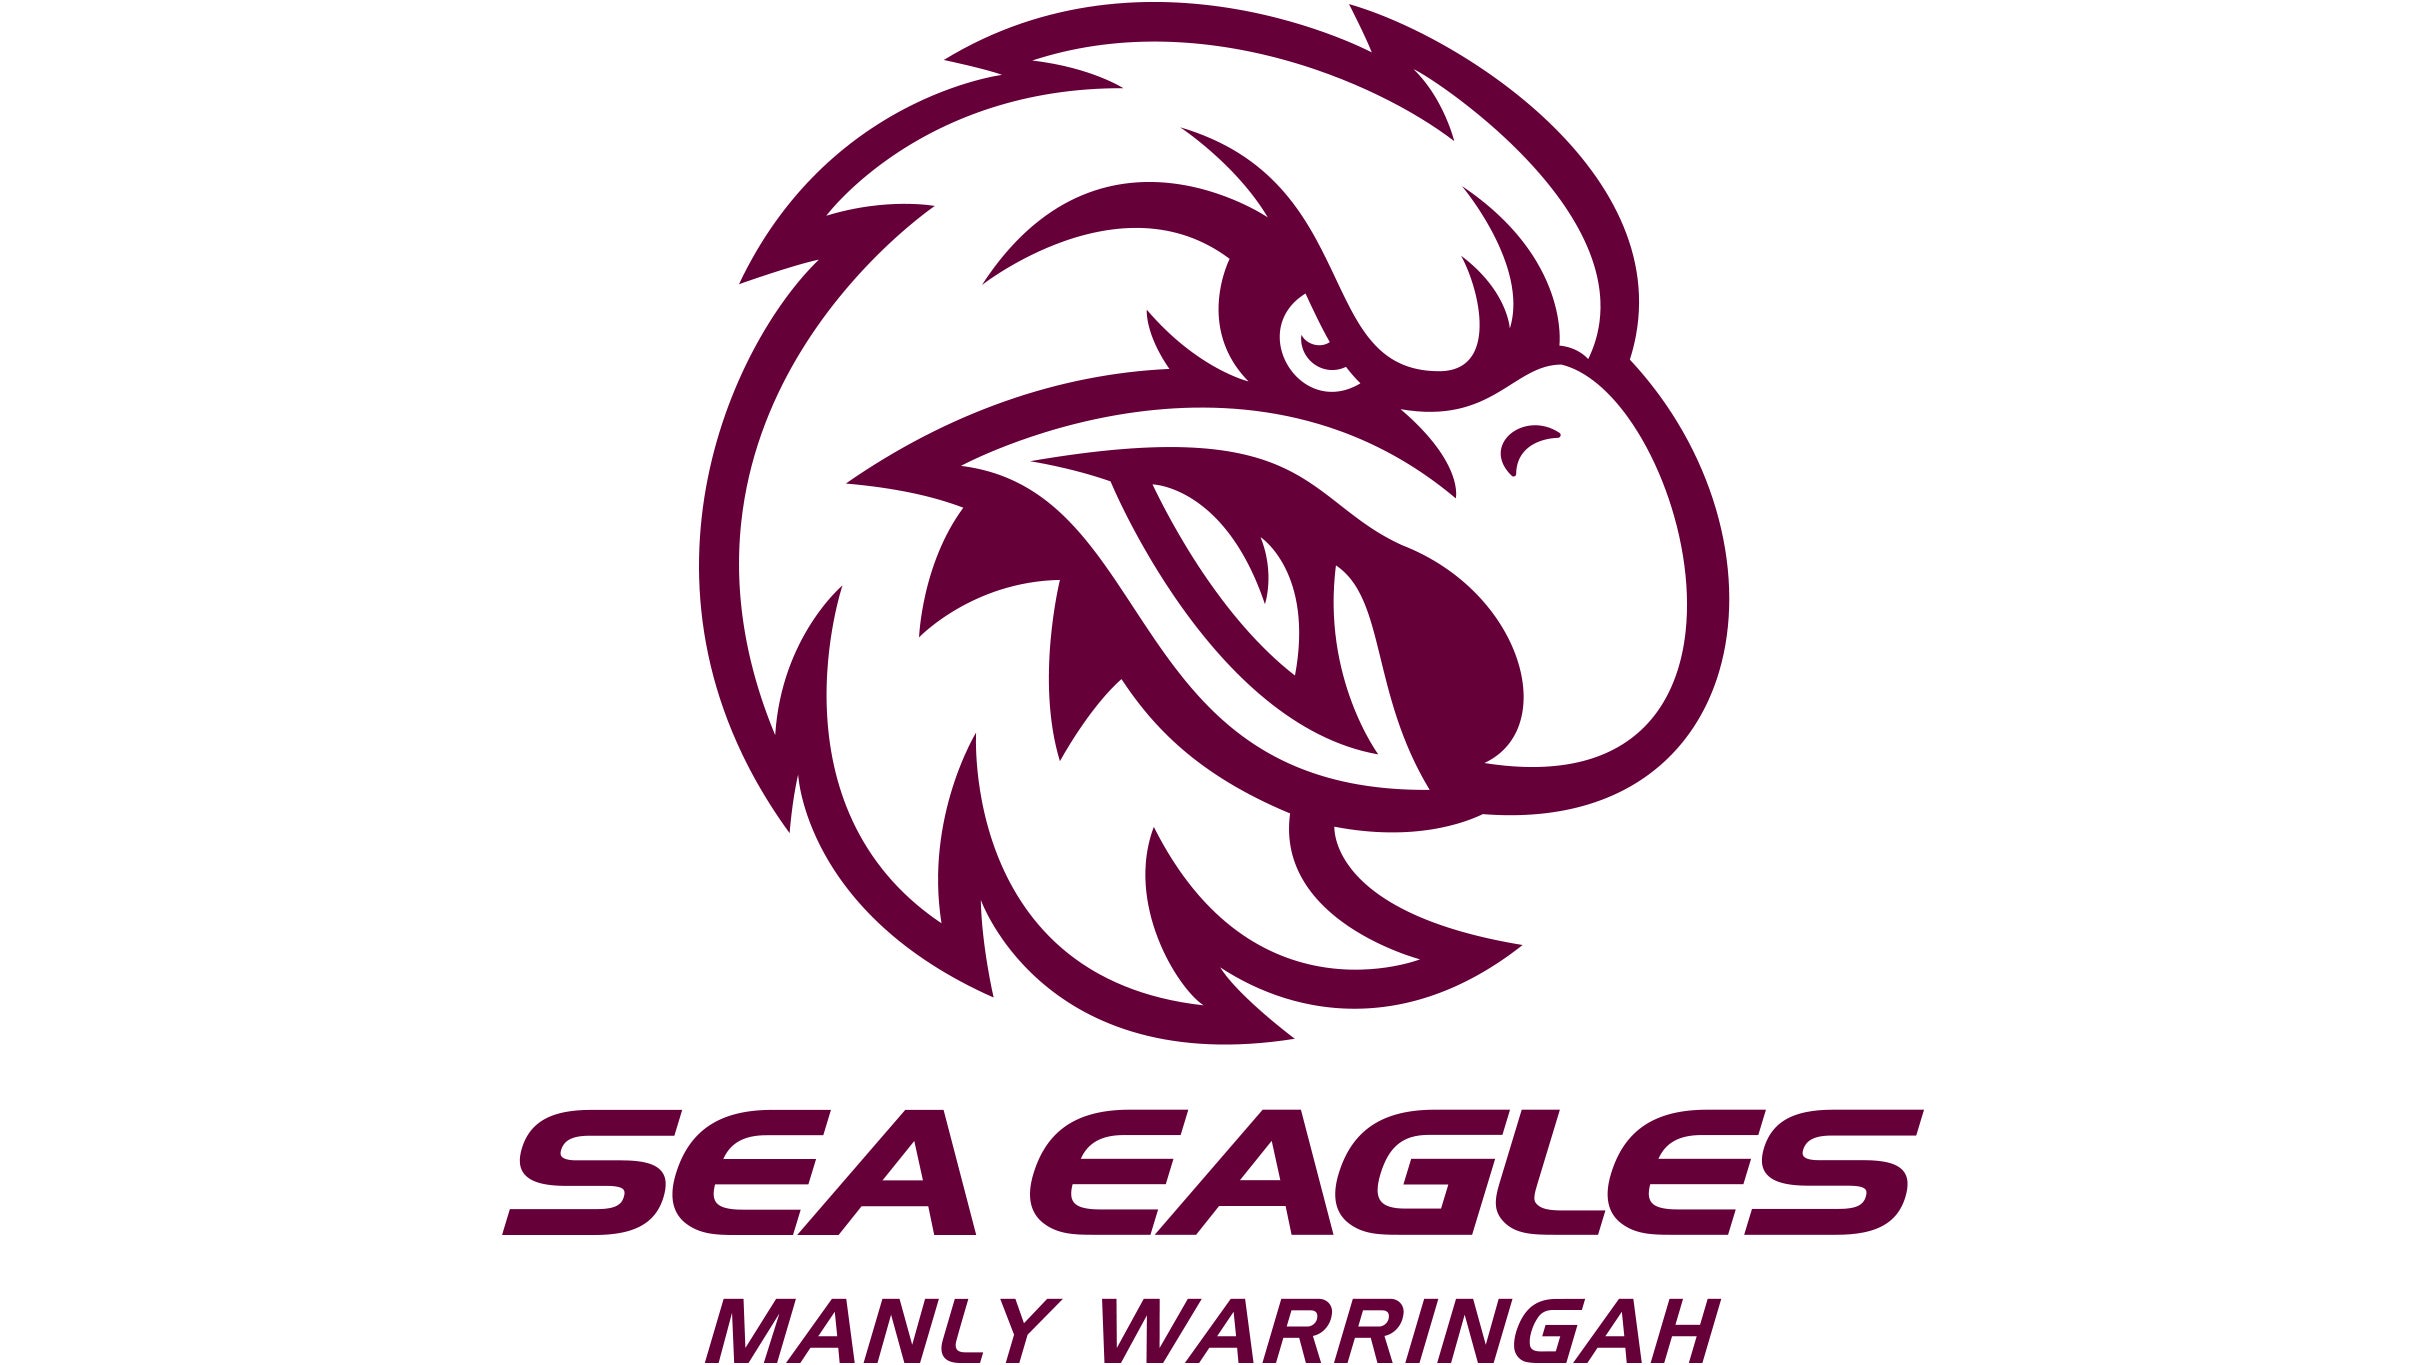 Manly Warringah Sea Eagles v Roosters in Brookvale promo photo for Sea Eagles Member presale offer code